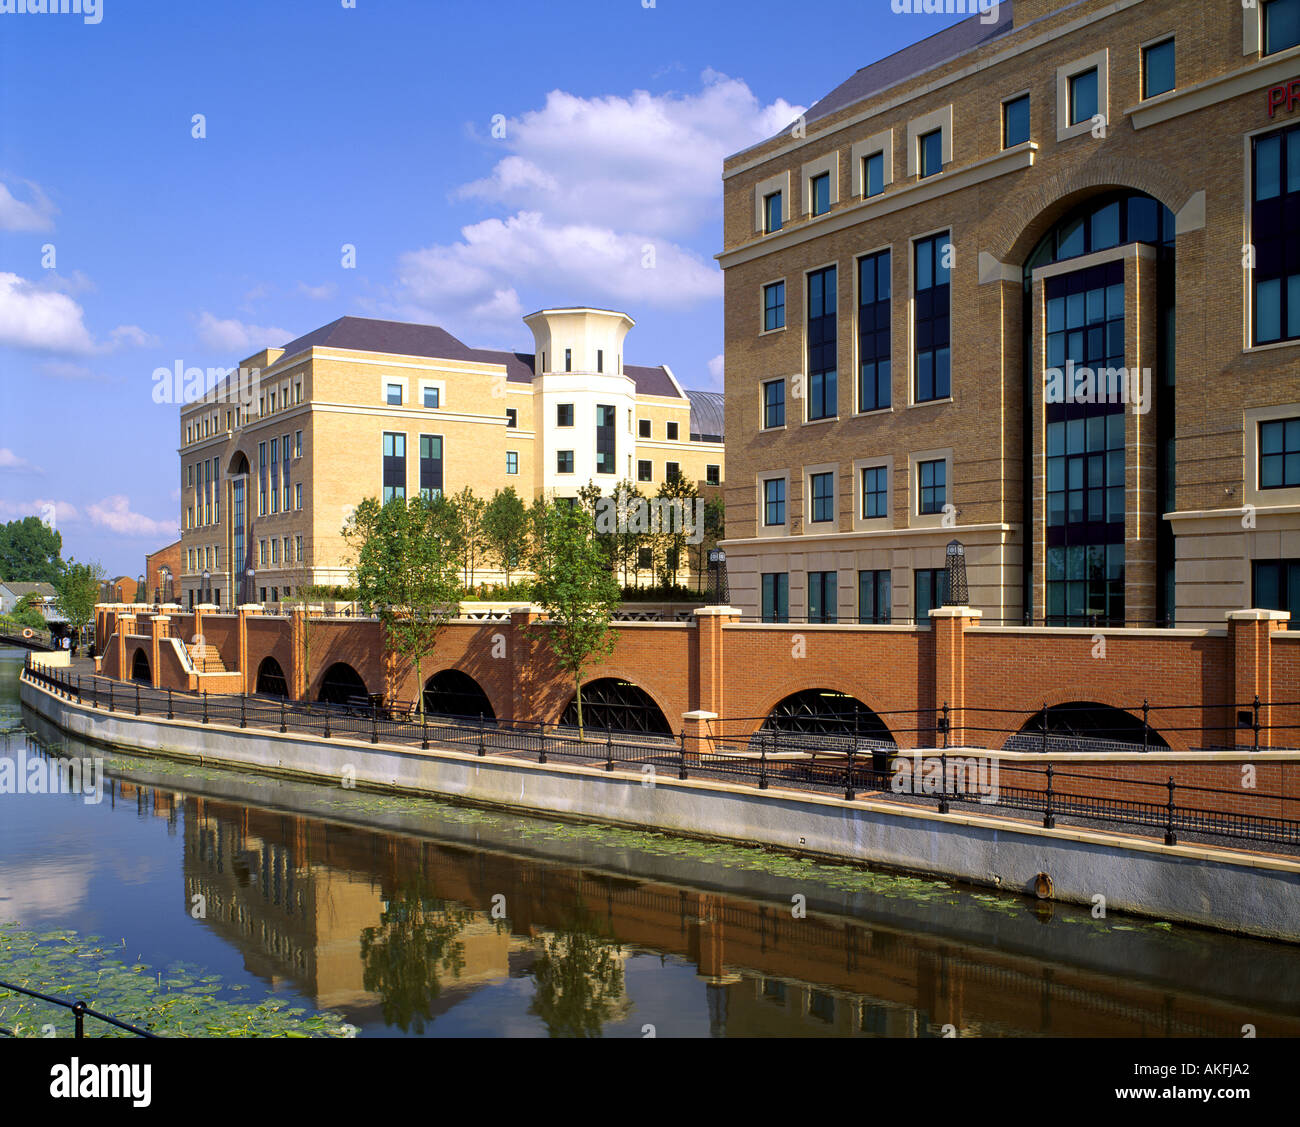 GB - BERKSHIRE: Kennett Avon Canal at Reading Foto Stock